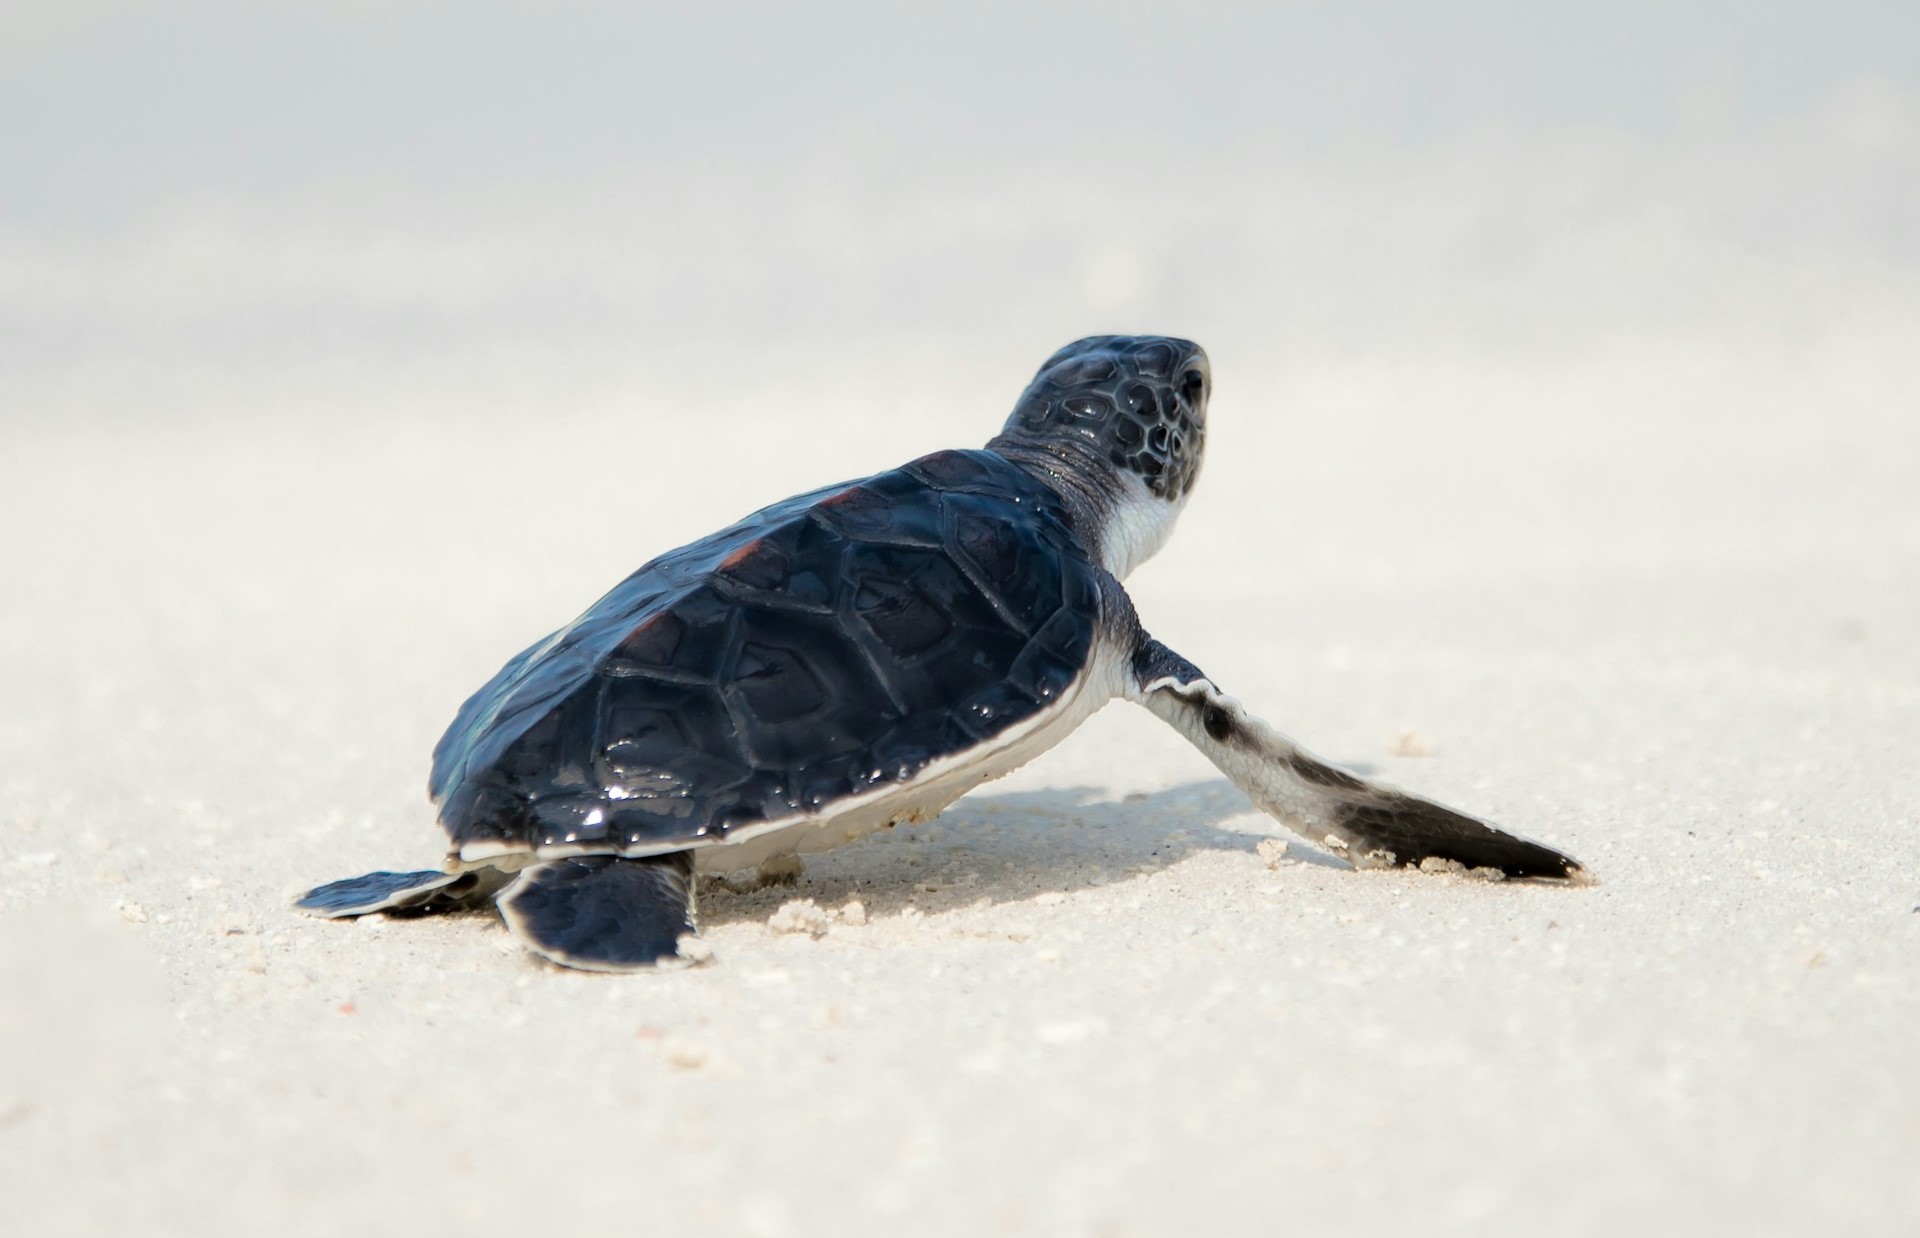 Baby turtle on sand